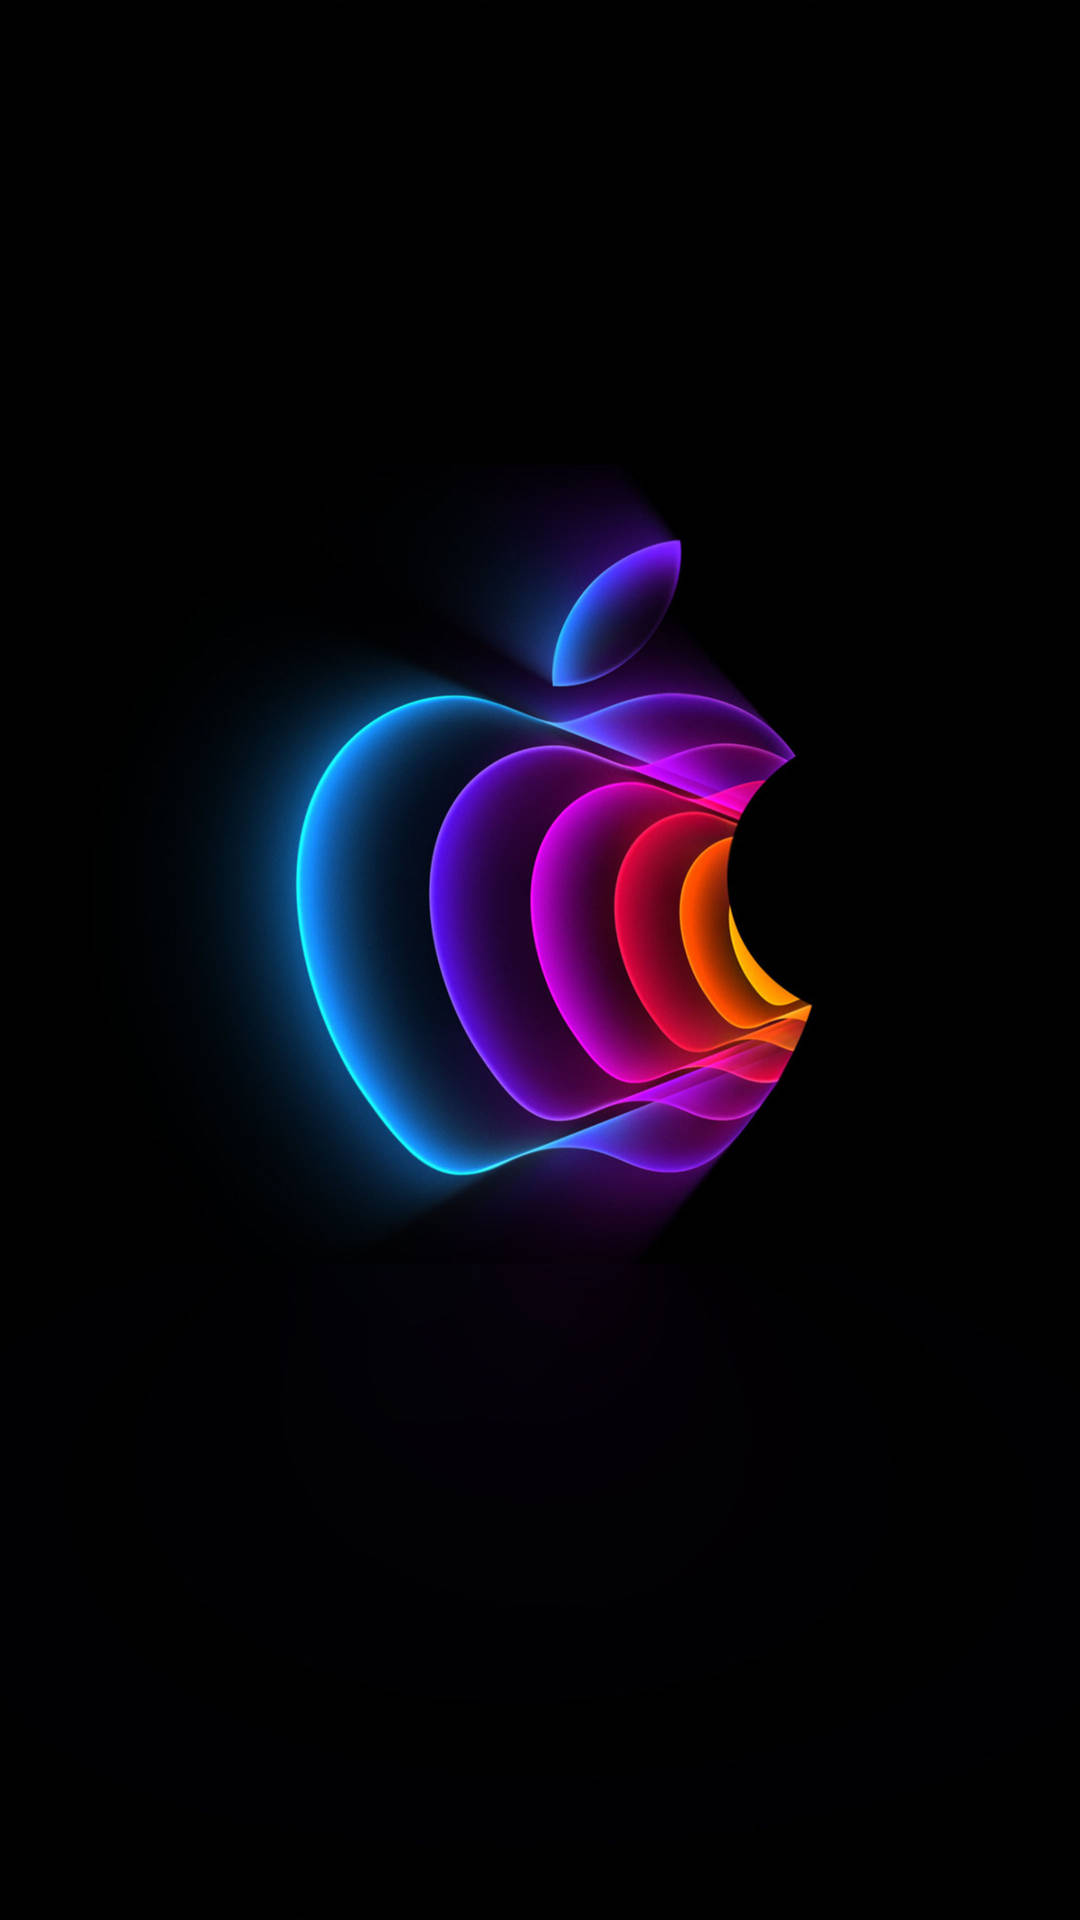 Buntesneon Apple Logo 4k Hd Für Mobilgeräte Wallpaper